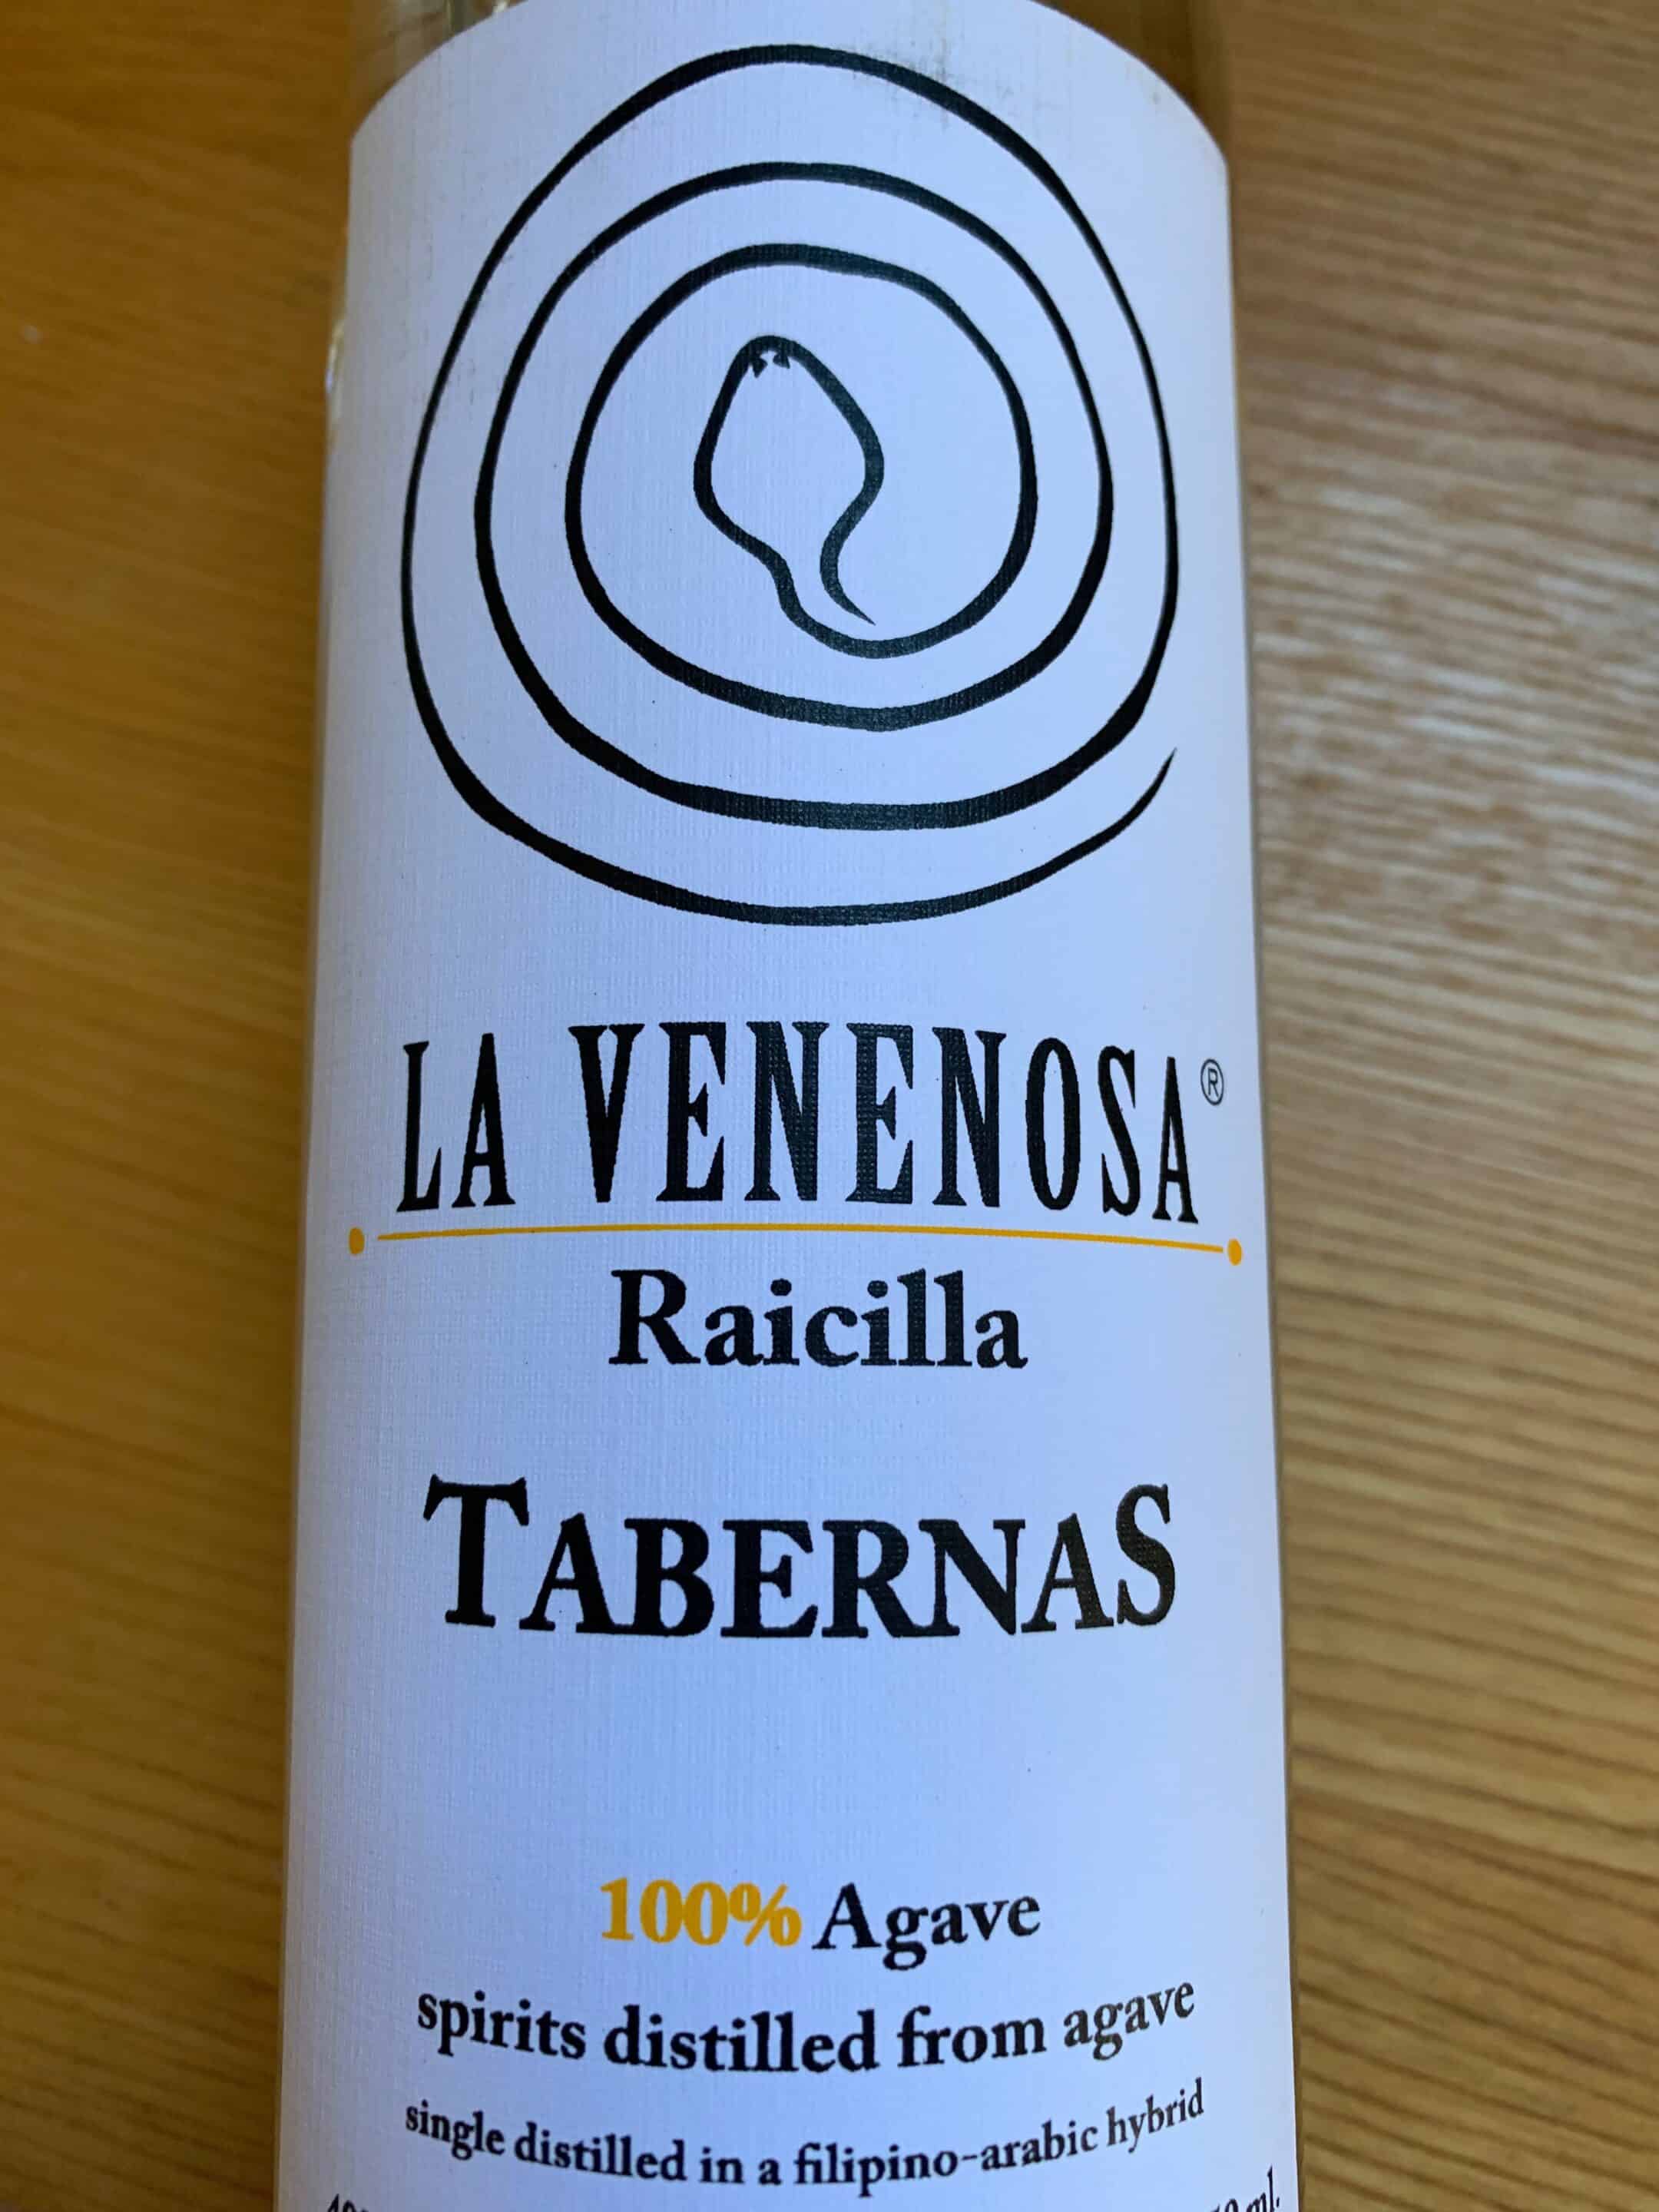 La Venenosa Raicilla Tabernas - Tasting notes